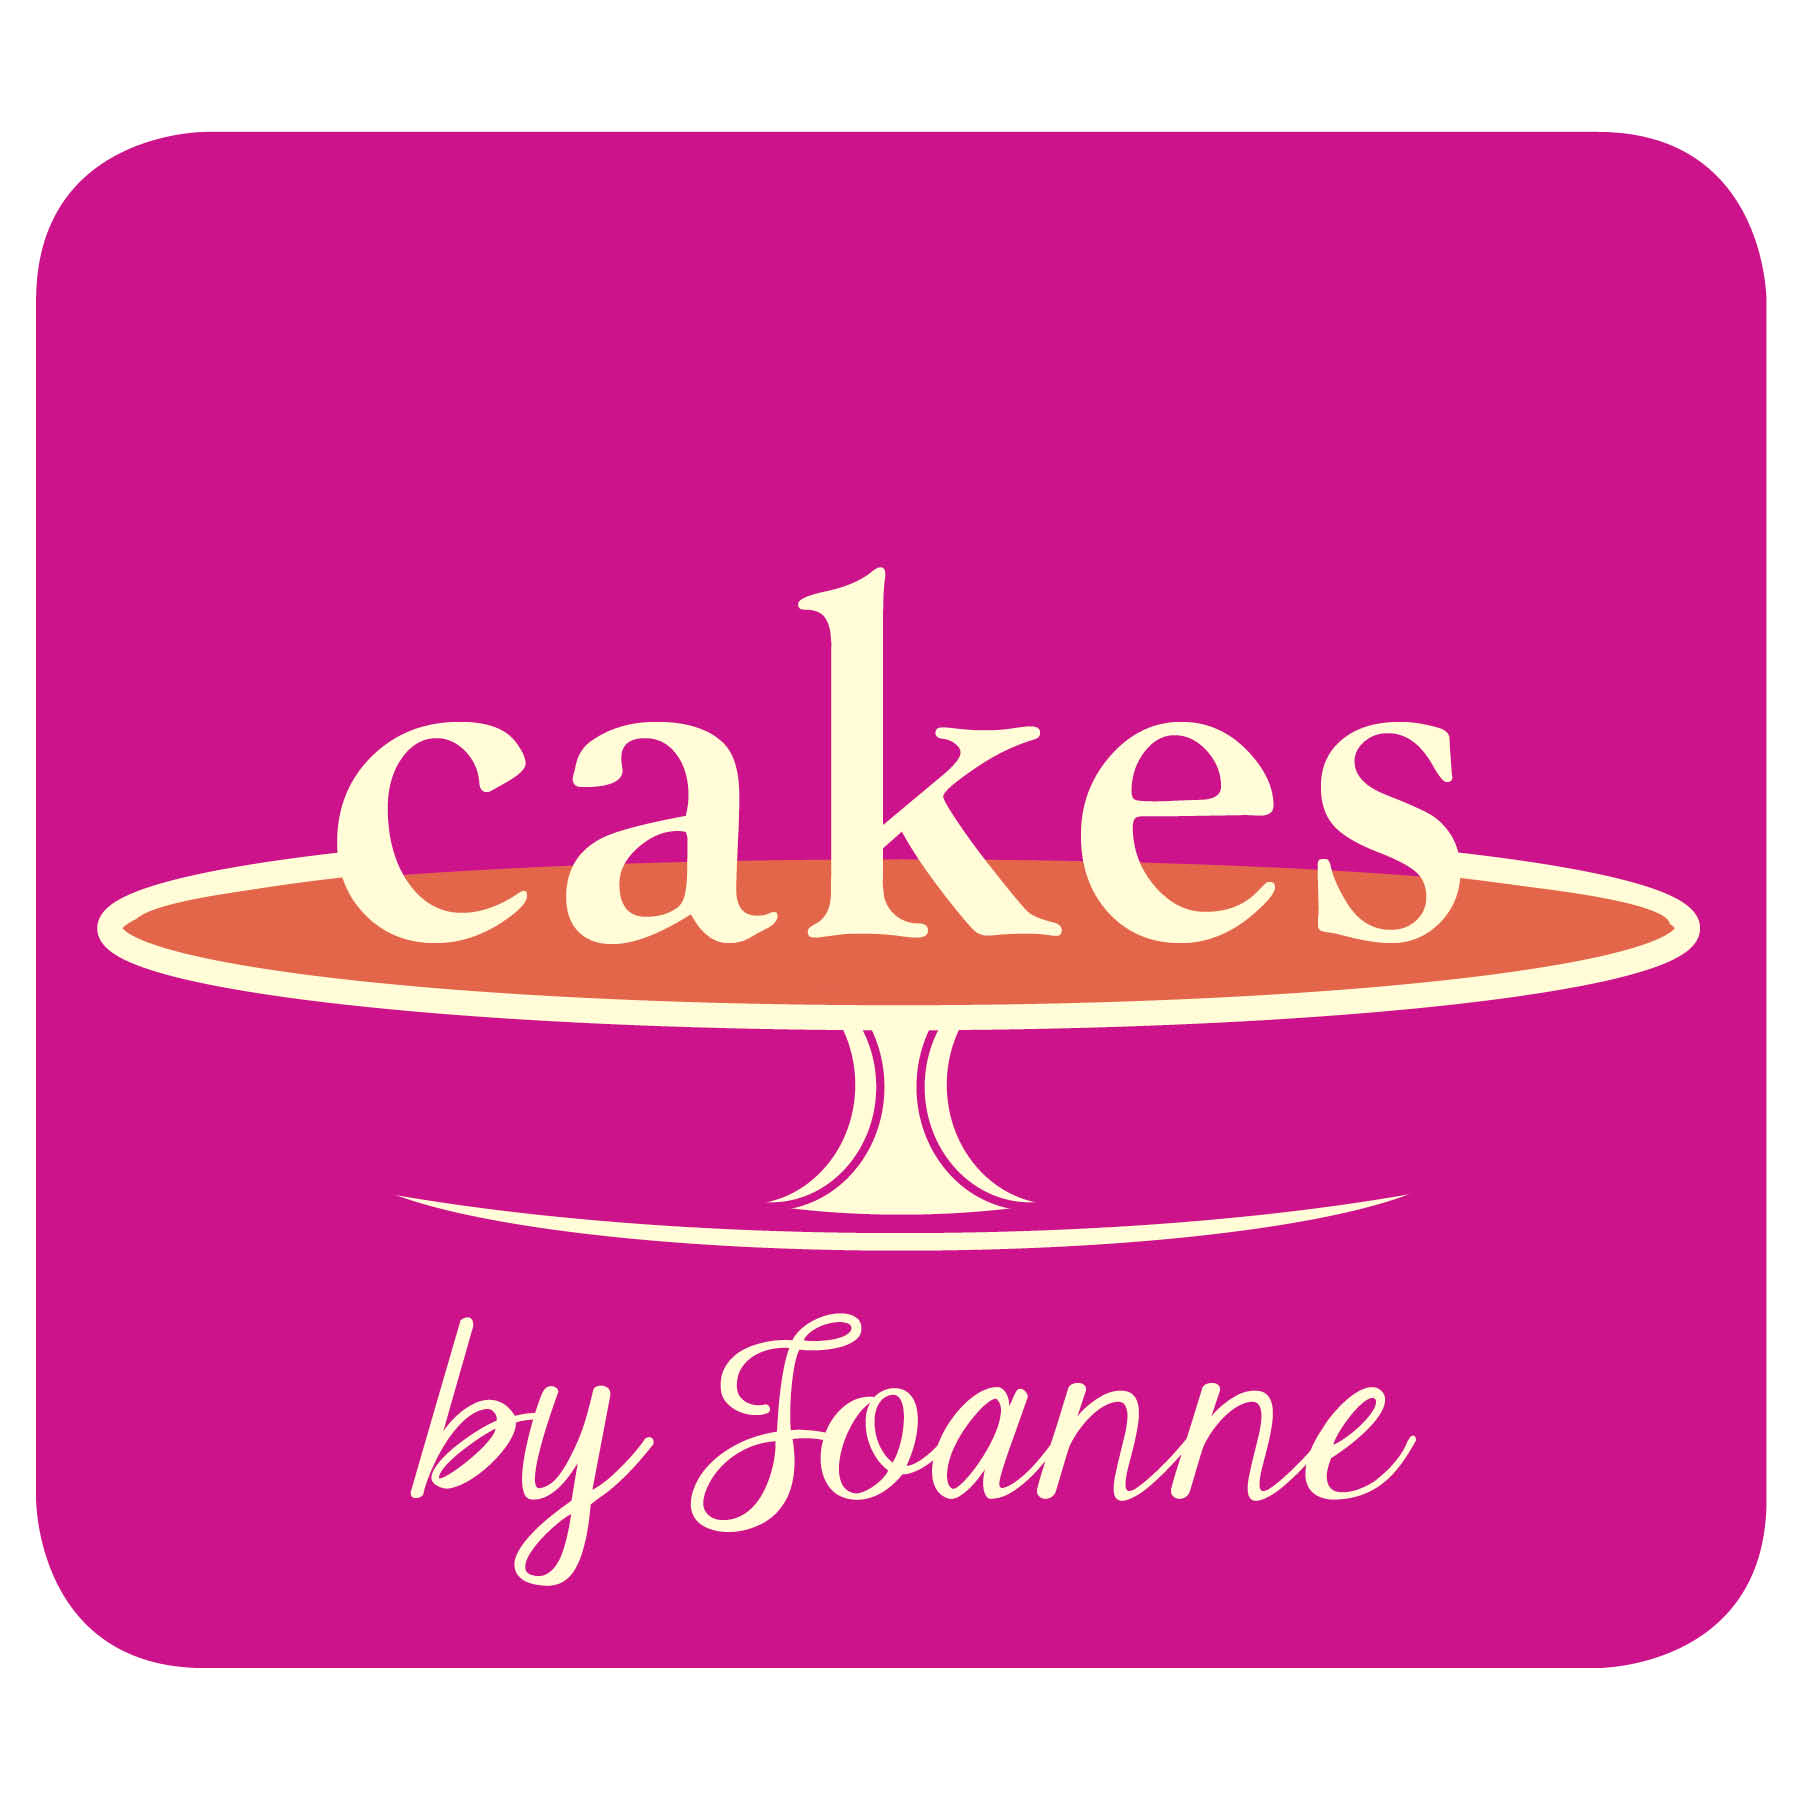 Cakes by Joanne logo